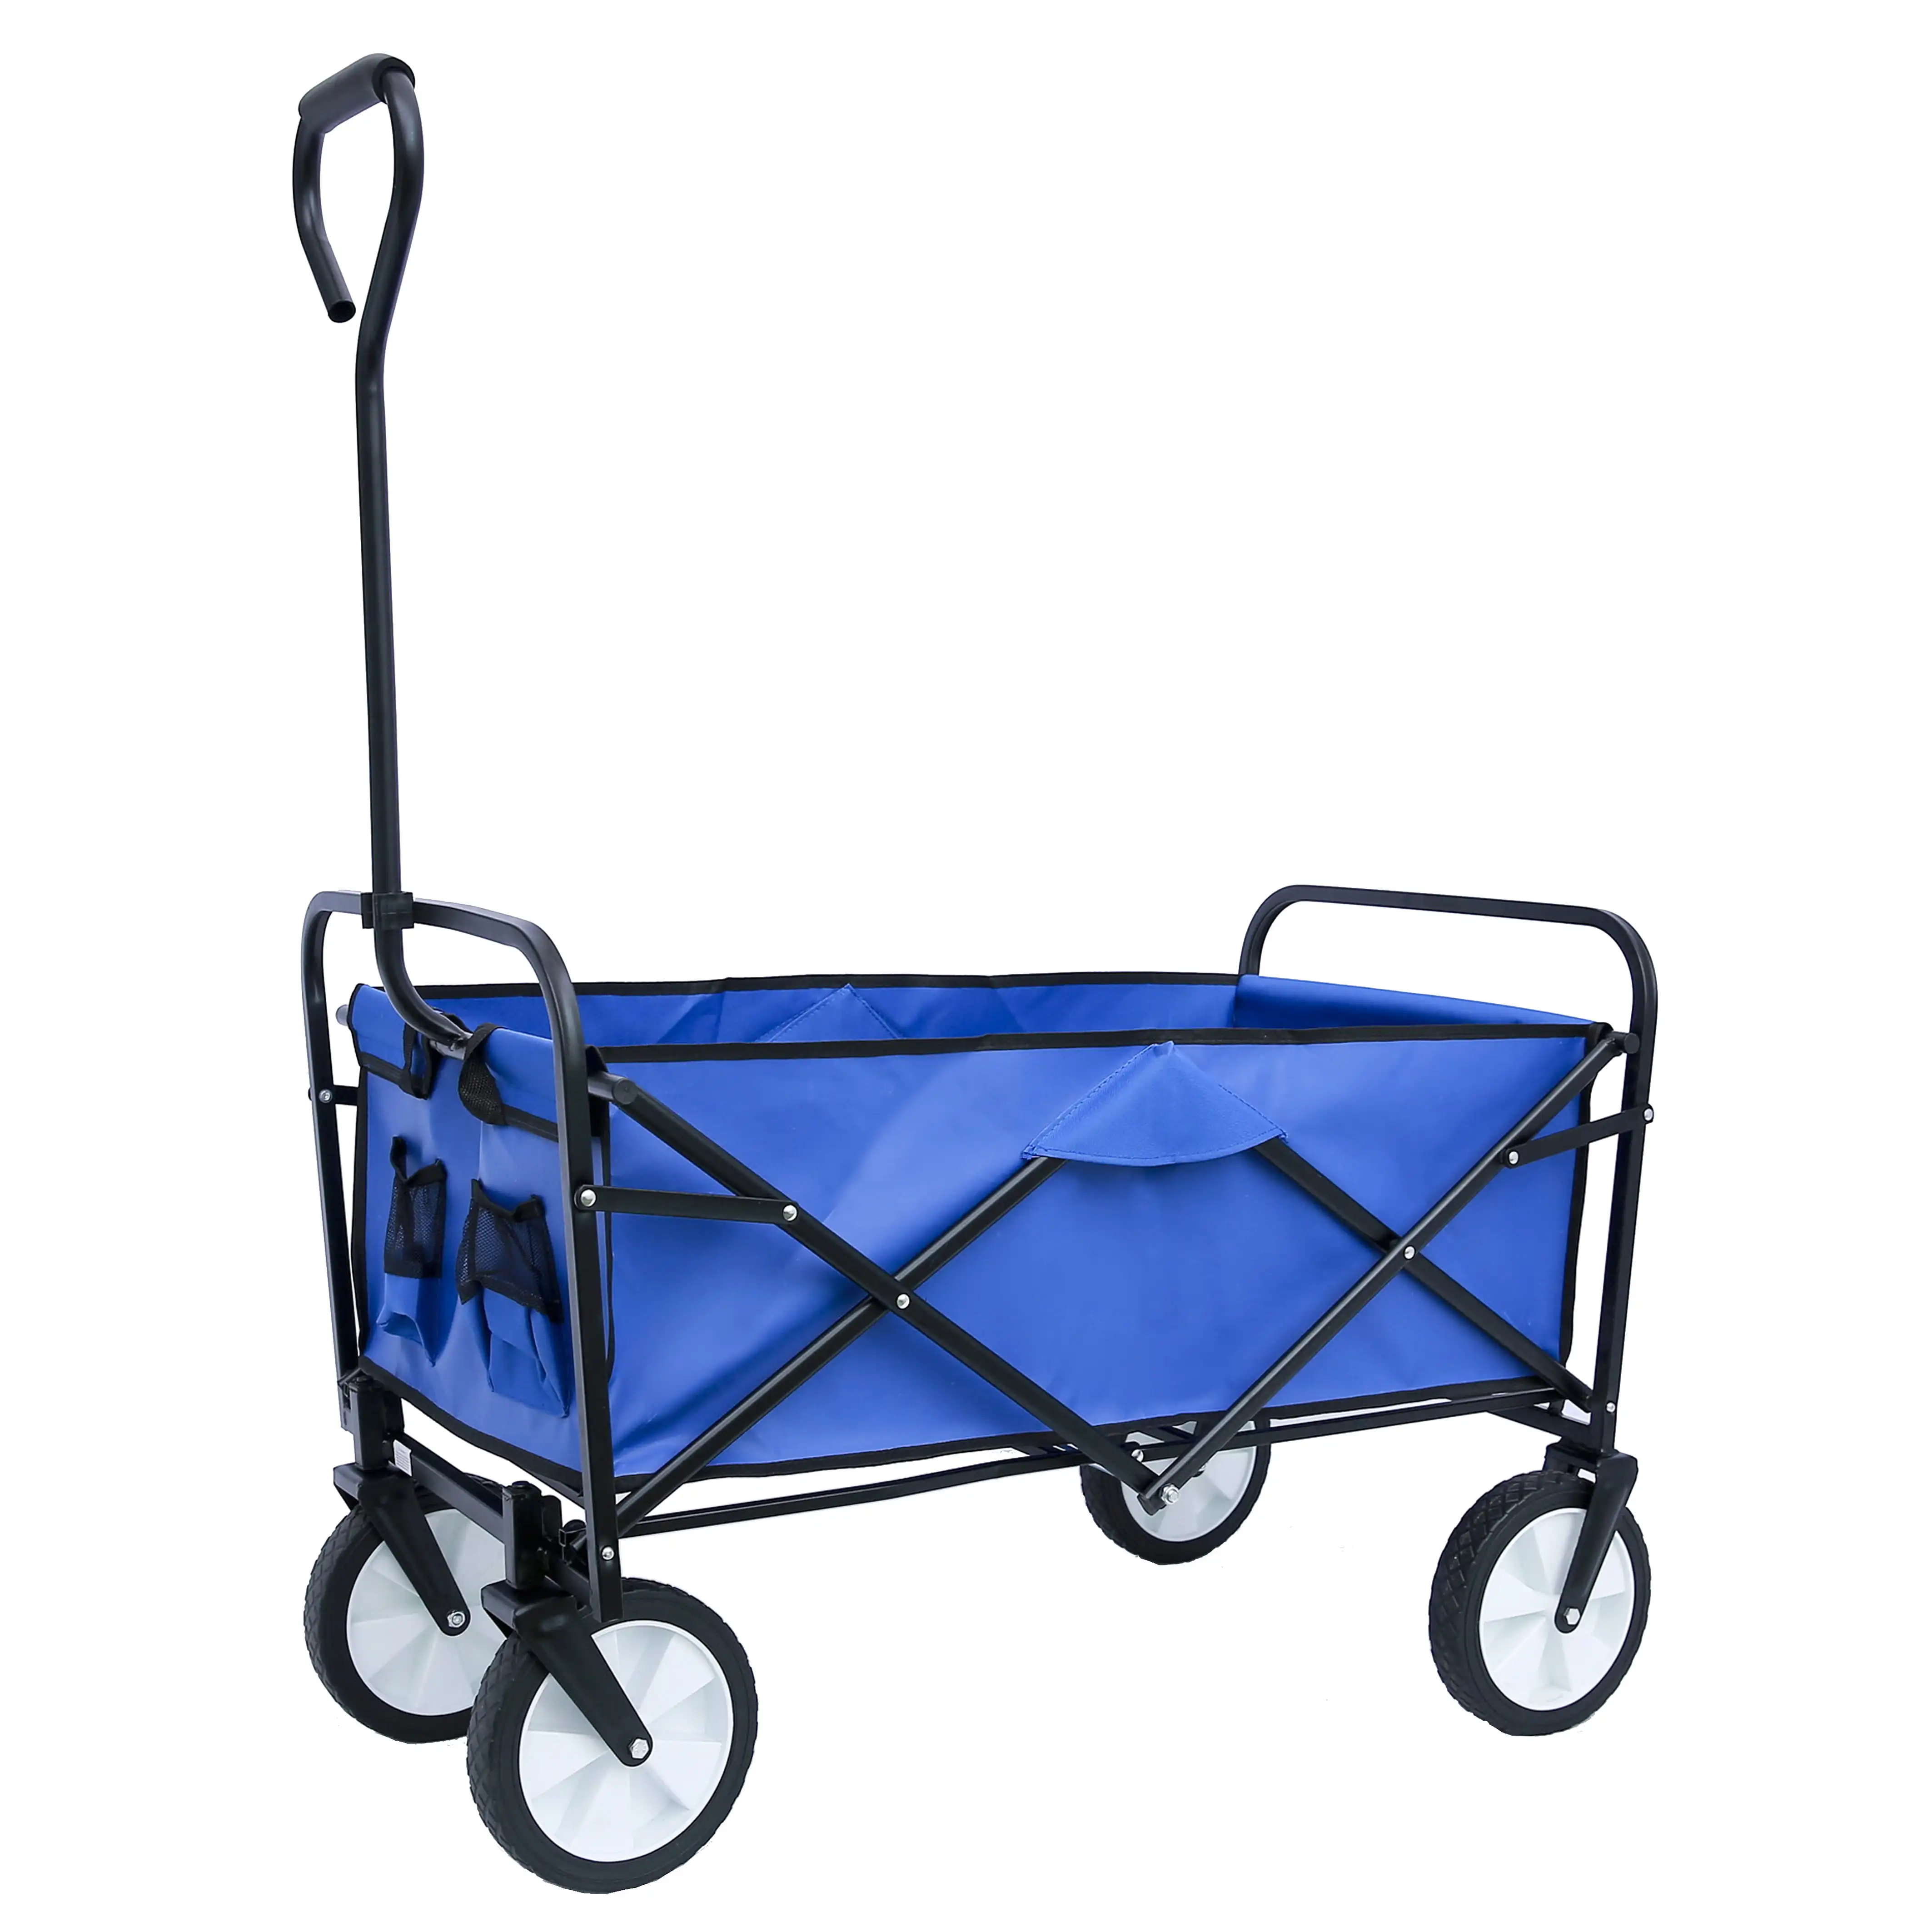 Aukfa Folding Wagon Garden Shopping Beach Cart - Blue